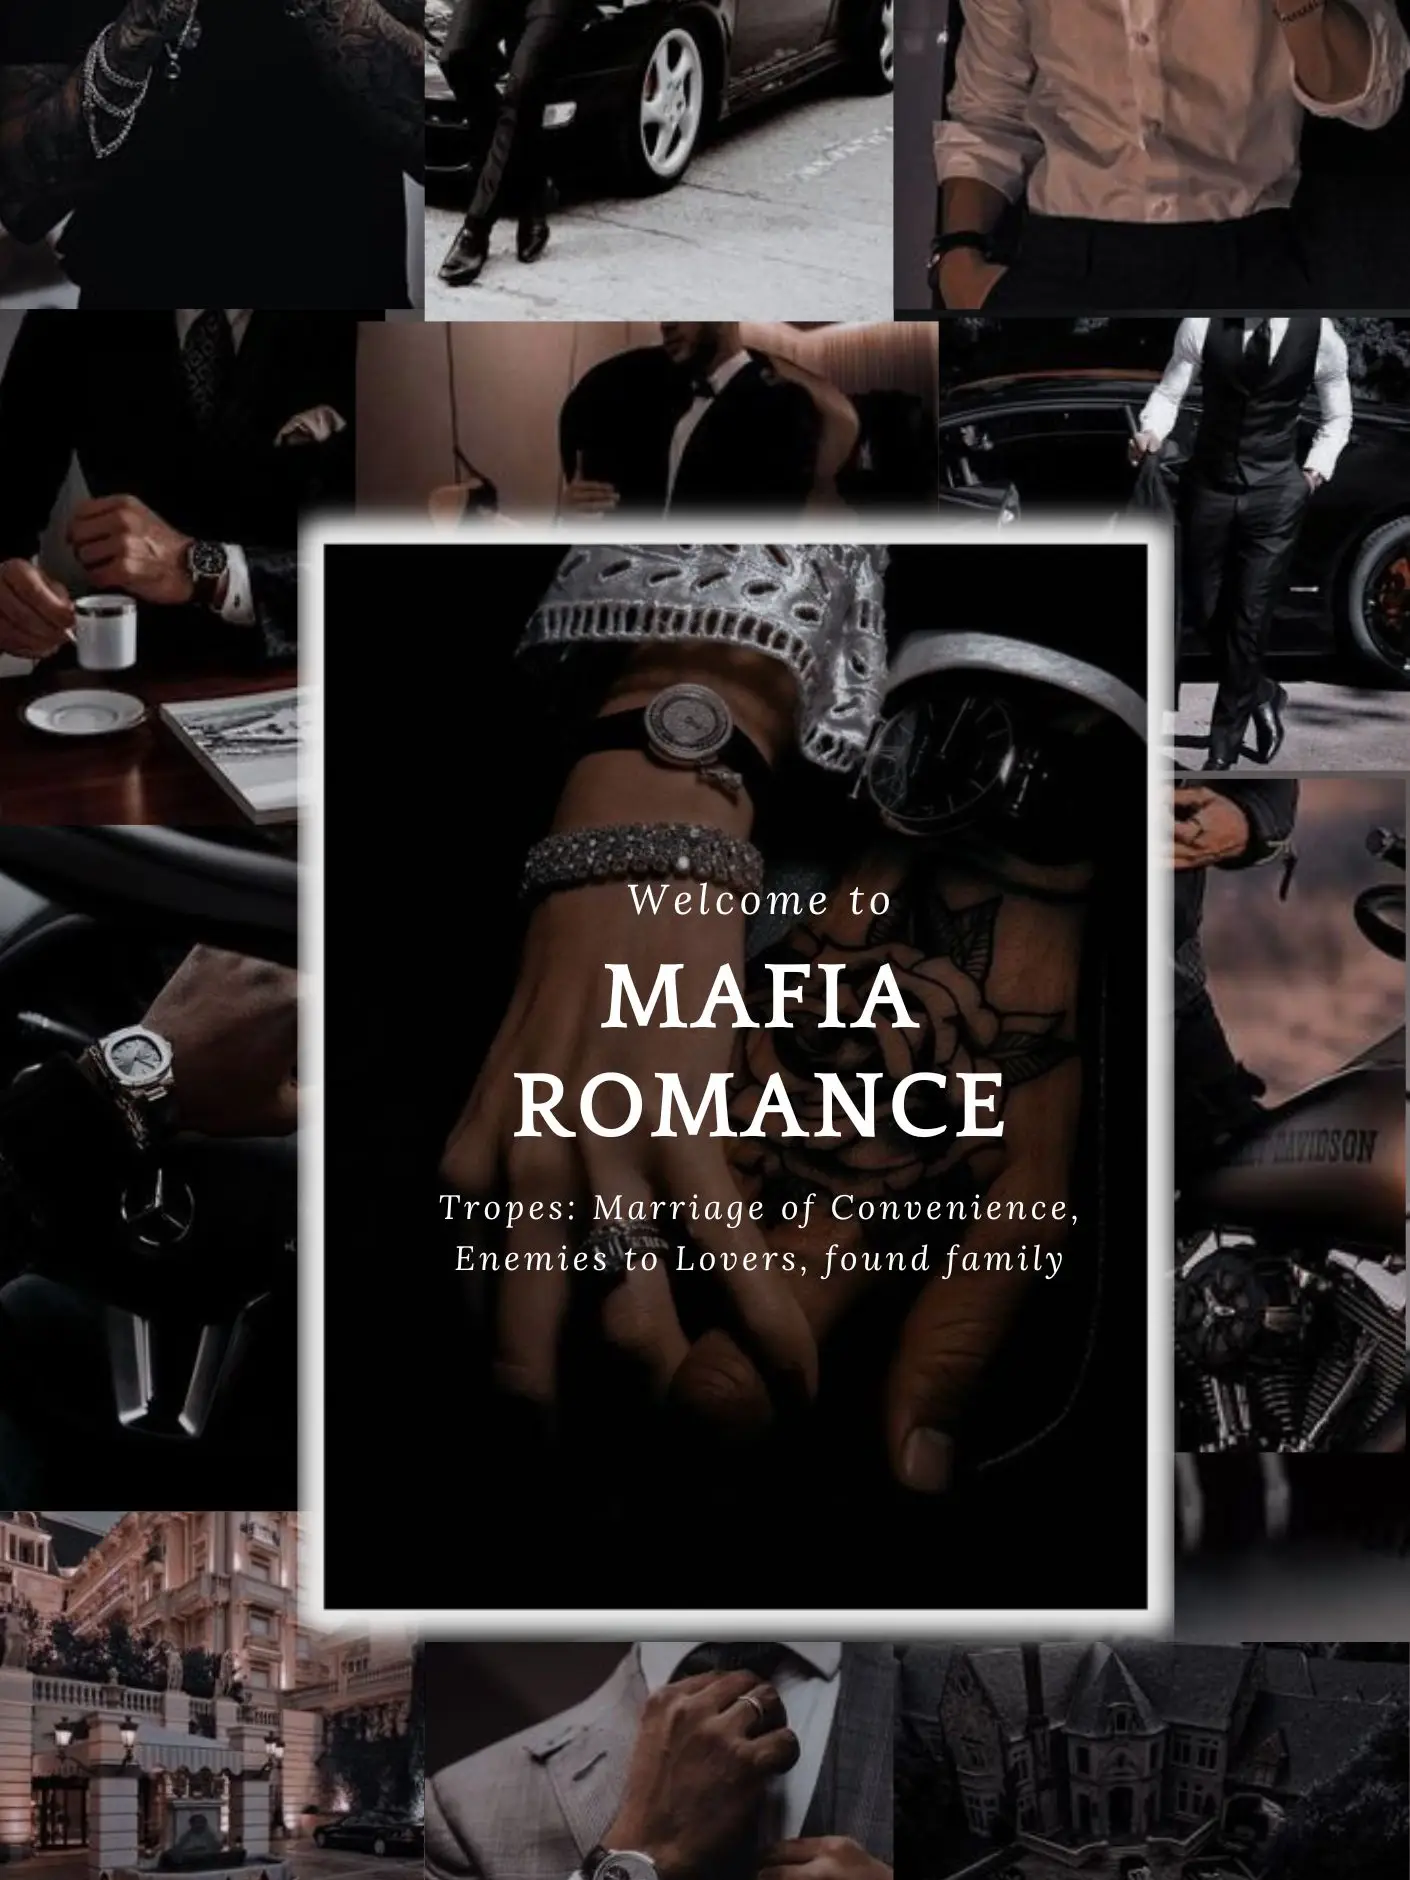 Mafia romance trope wallpaper free